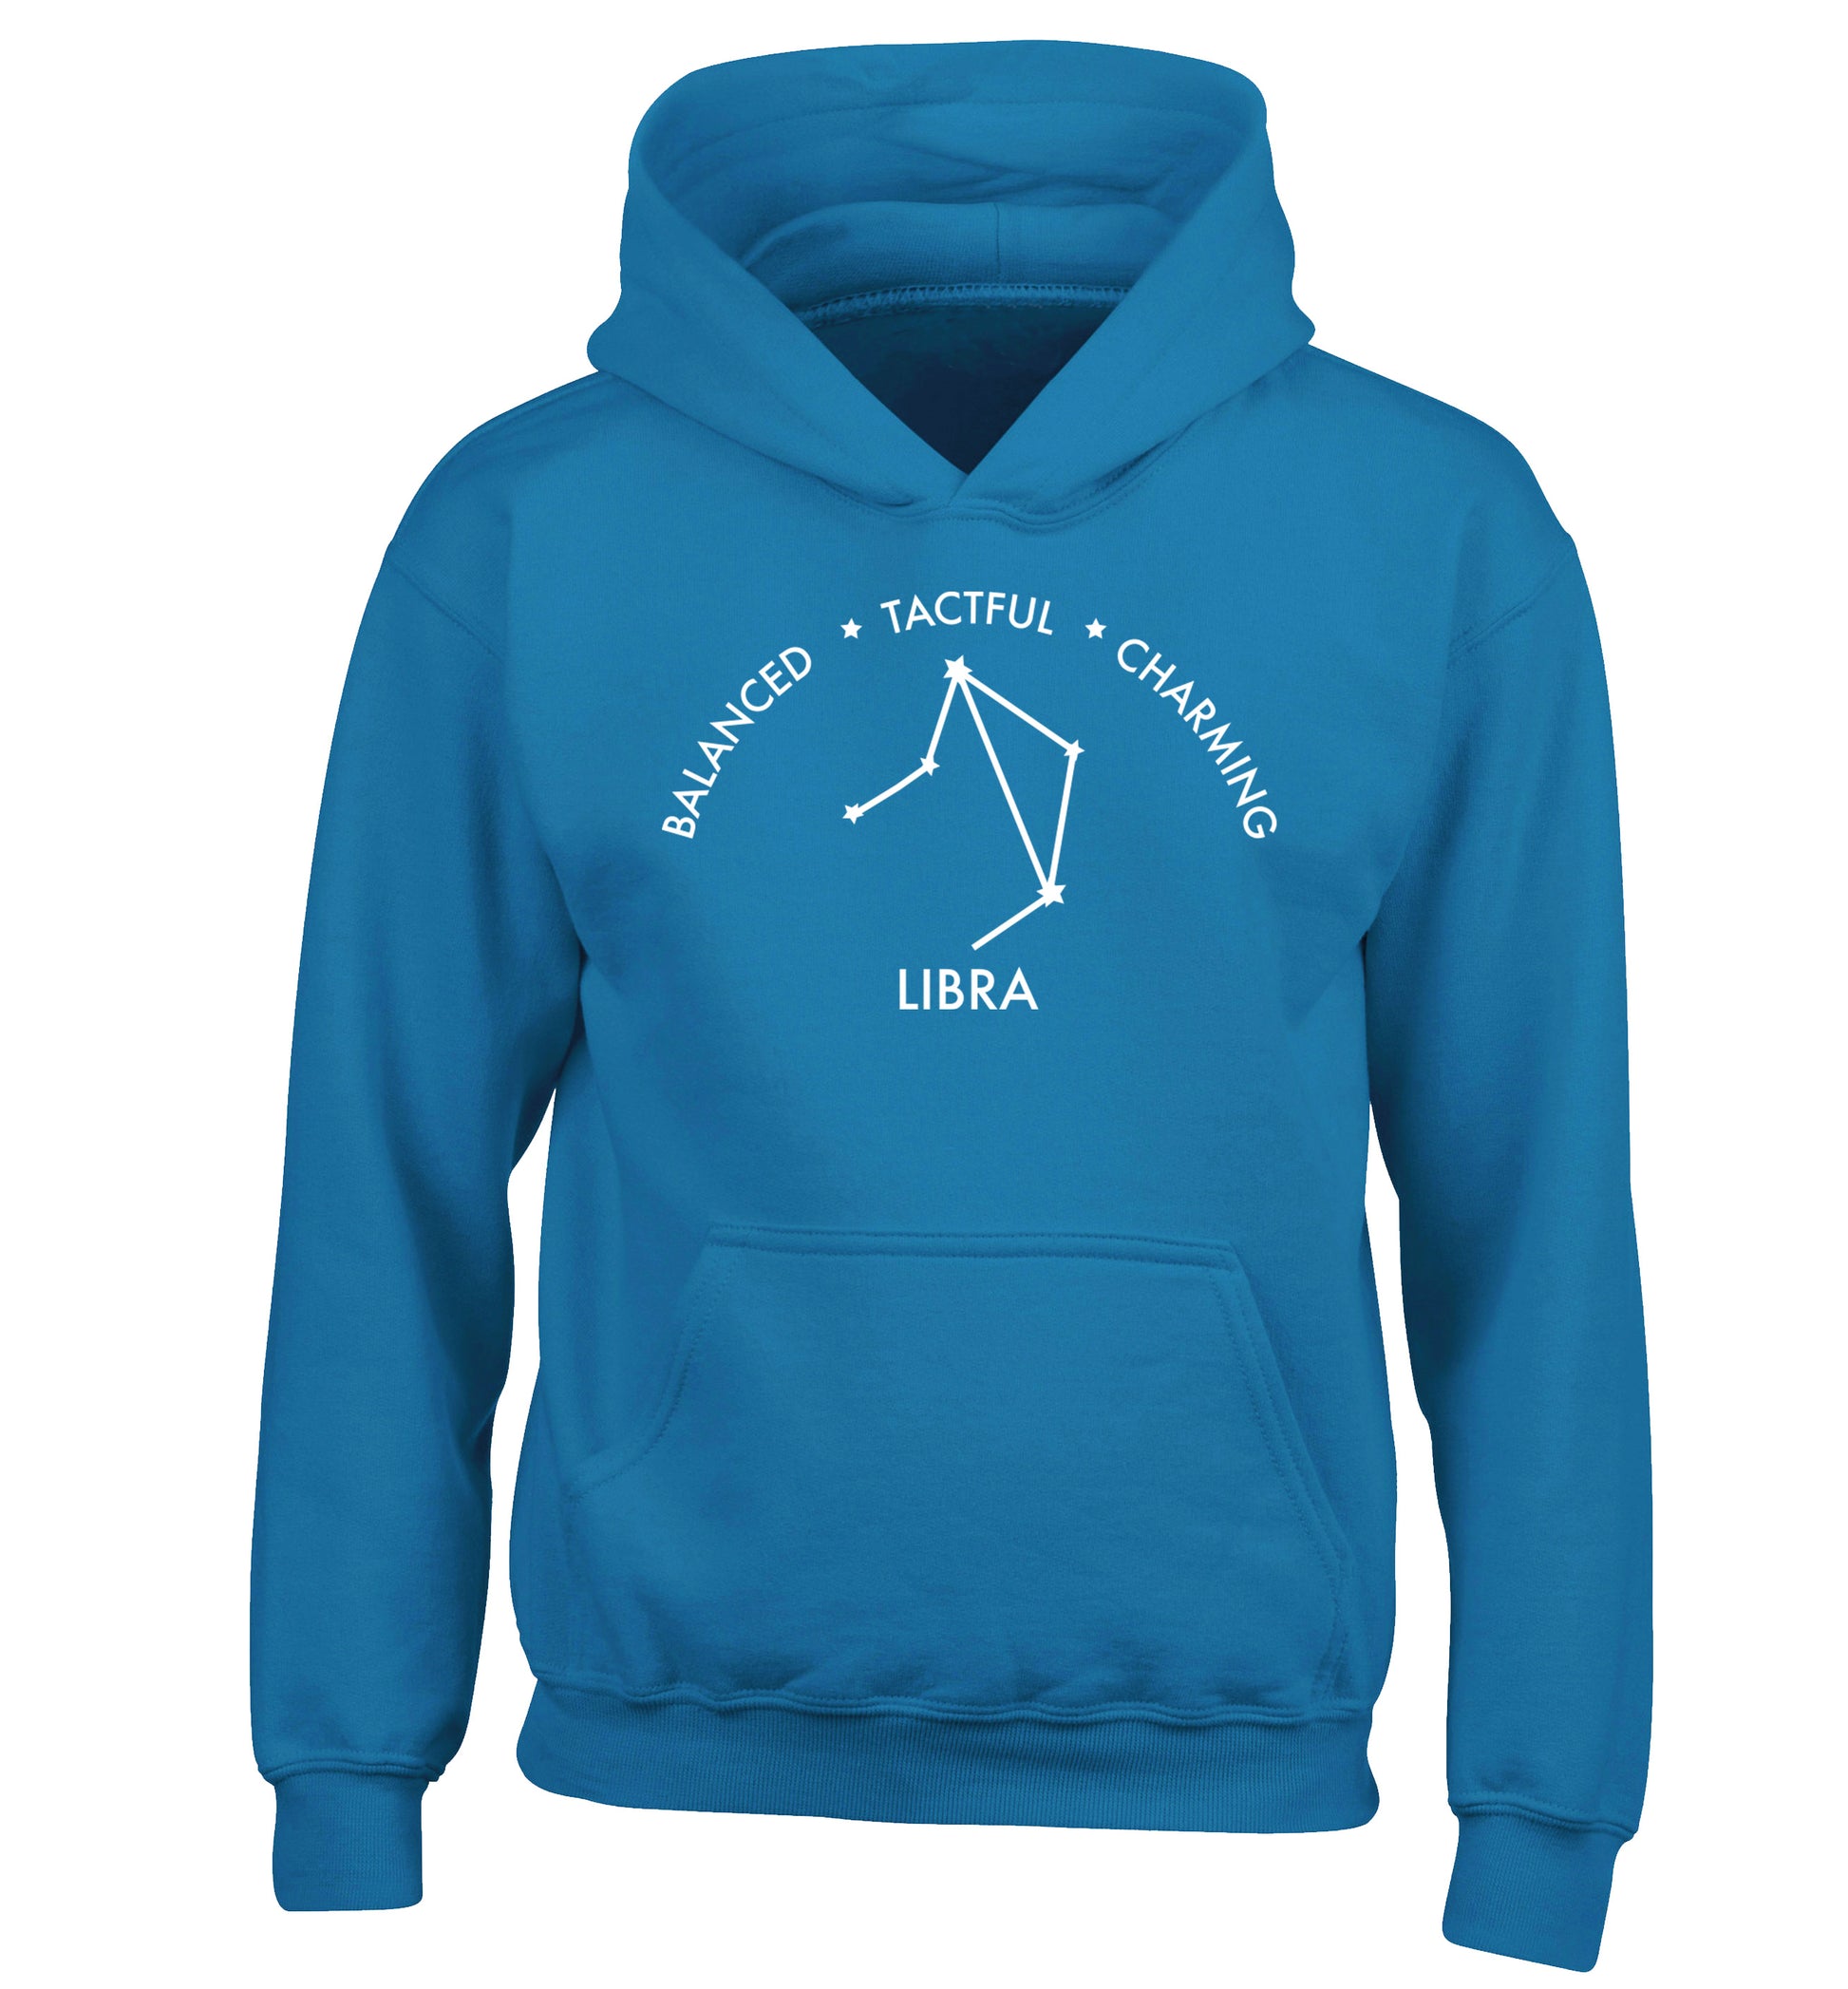 Libra: Balanced, Tactful, Charming children's blue hoodie 12-13 Years